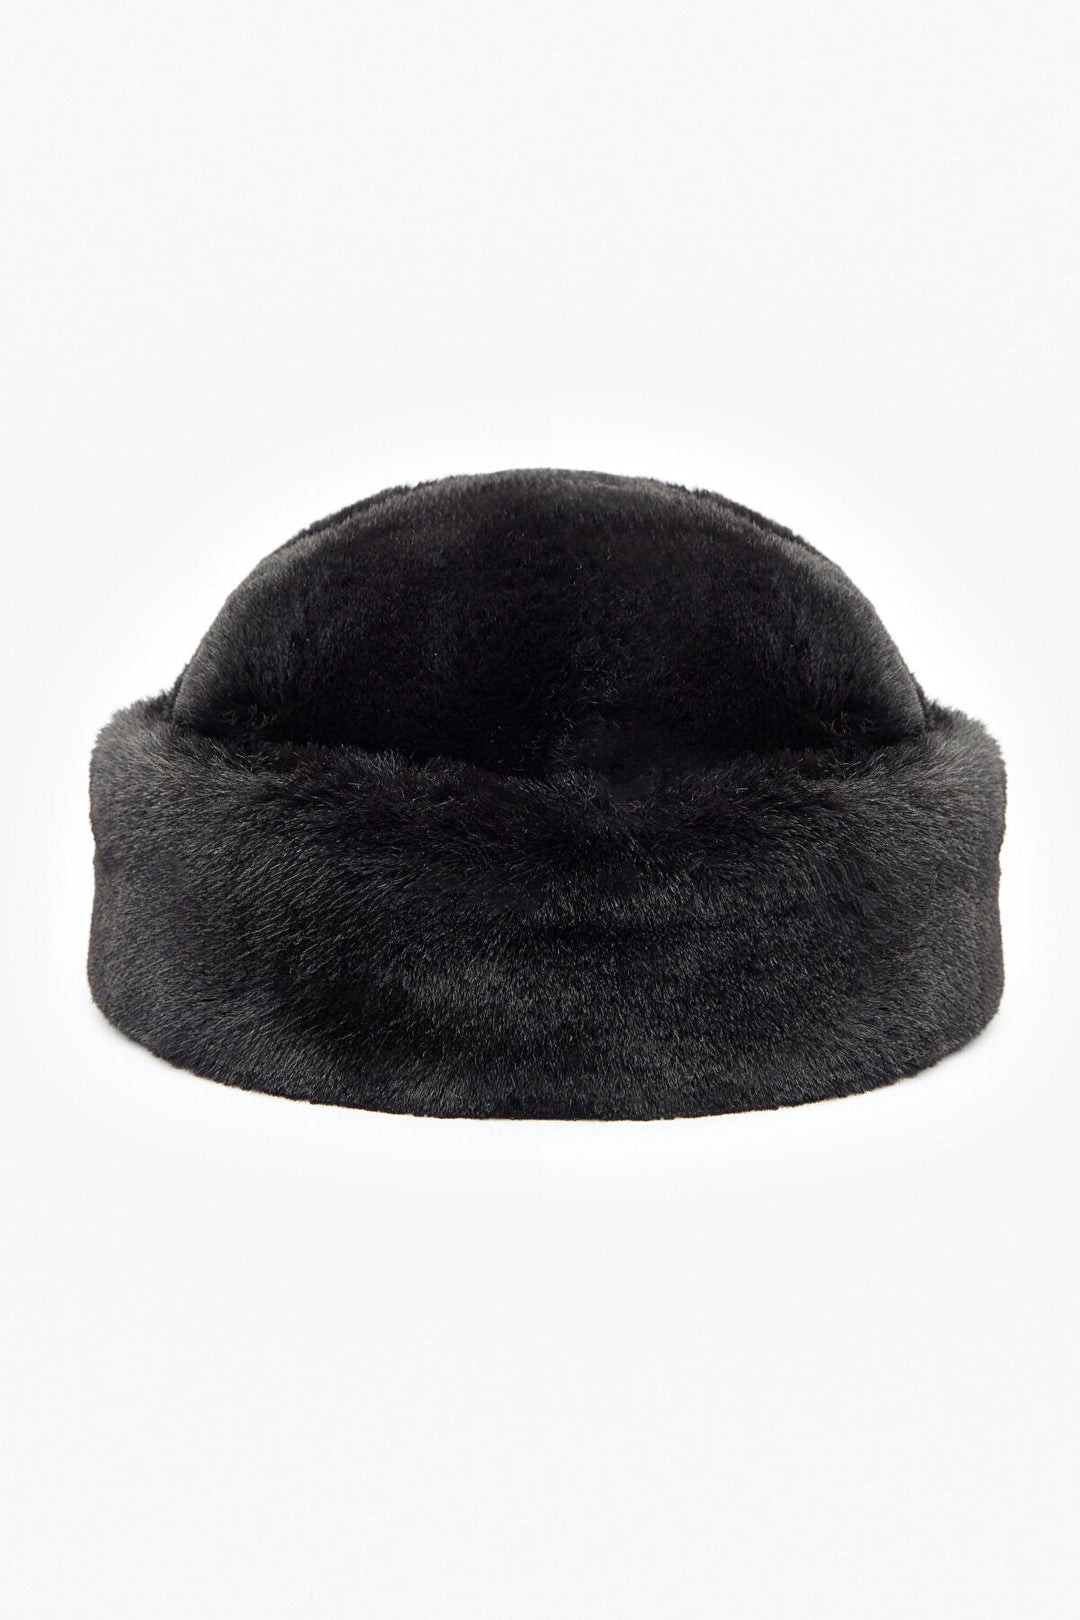 Vera Black Hat